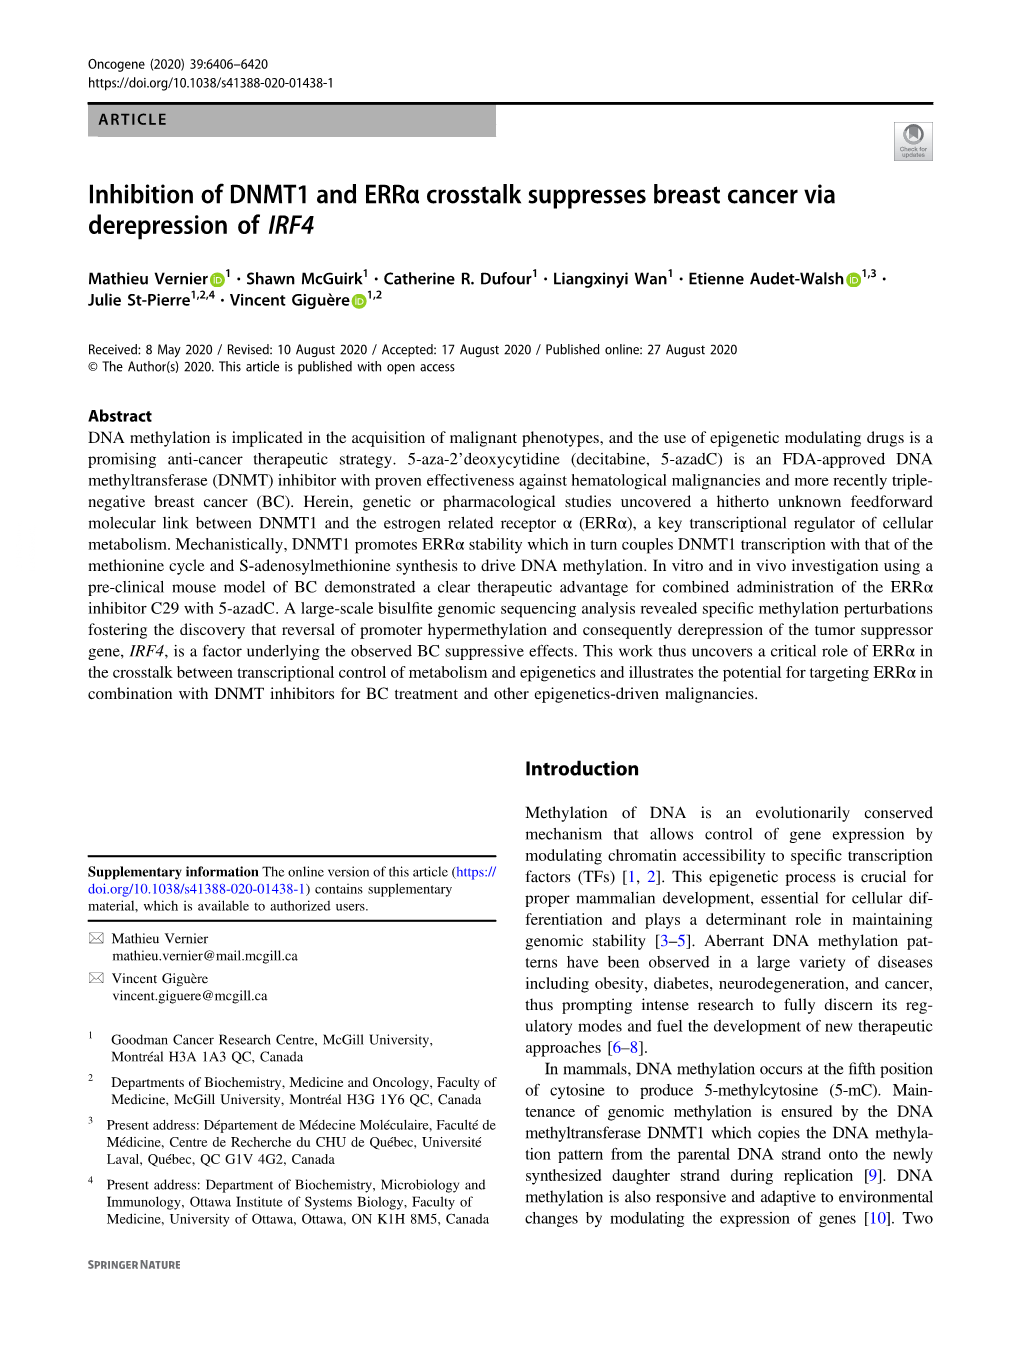 Inhibition of DNMT1 and Errα Crosstalk Suppresses Breast Cancer Via Derepression of IRF4